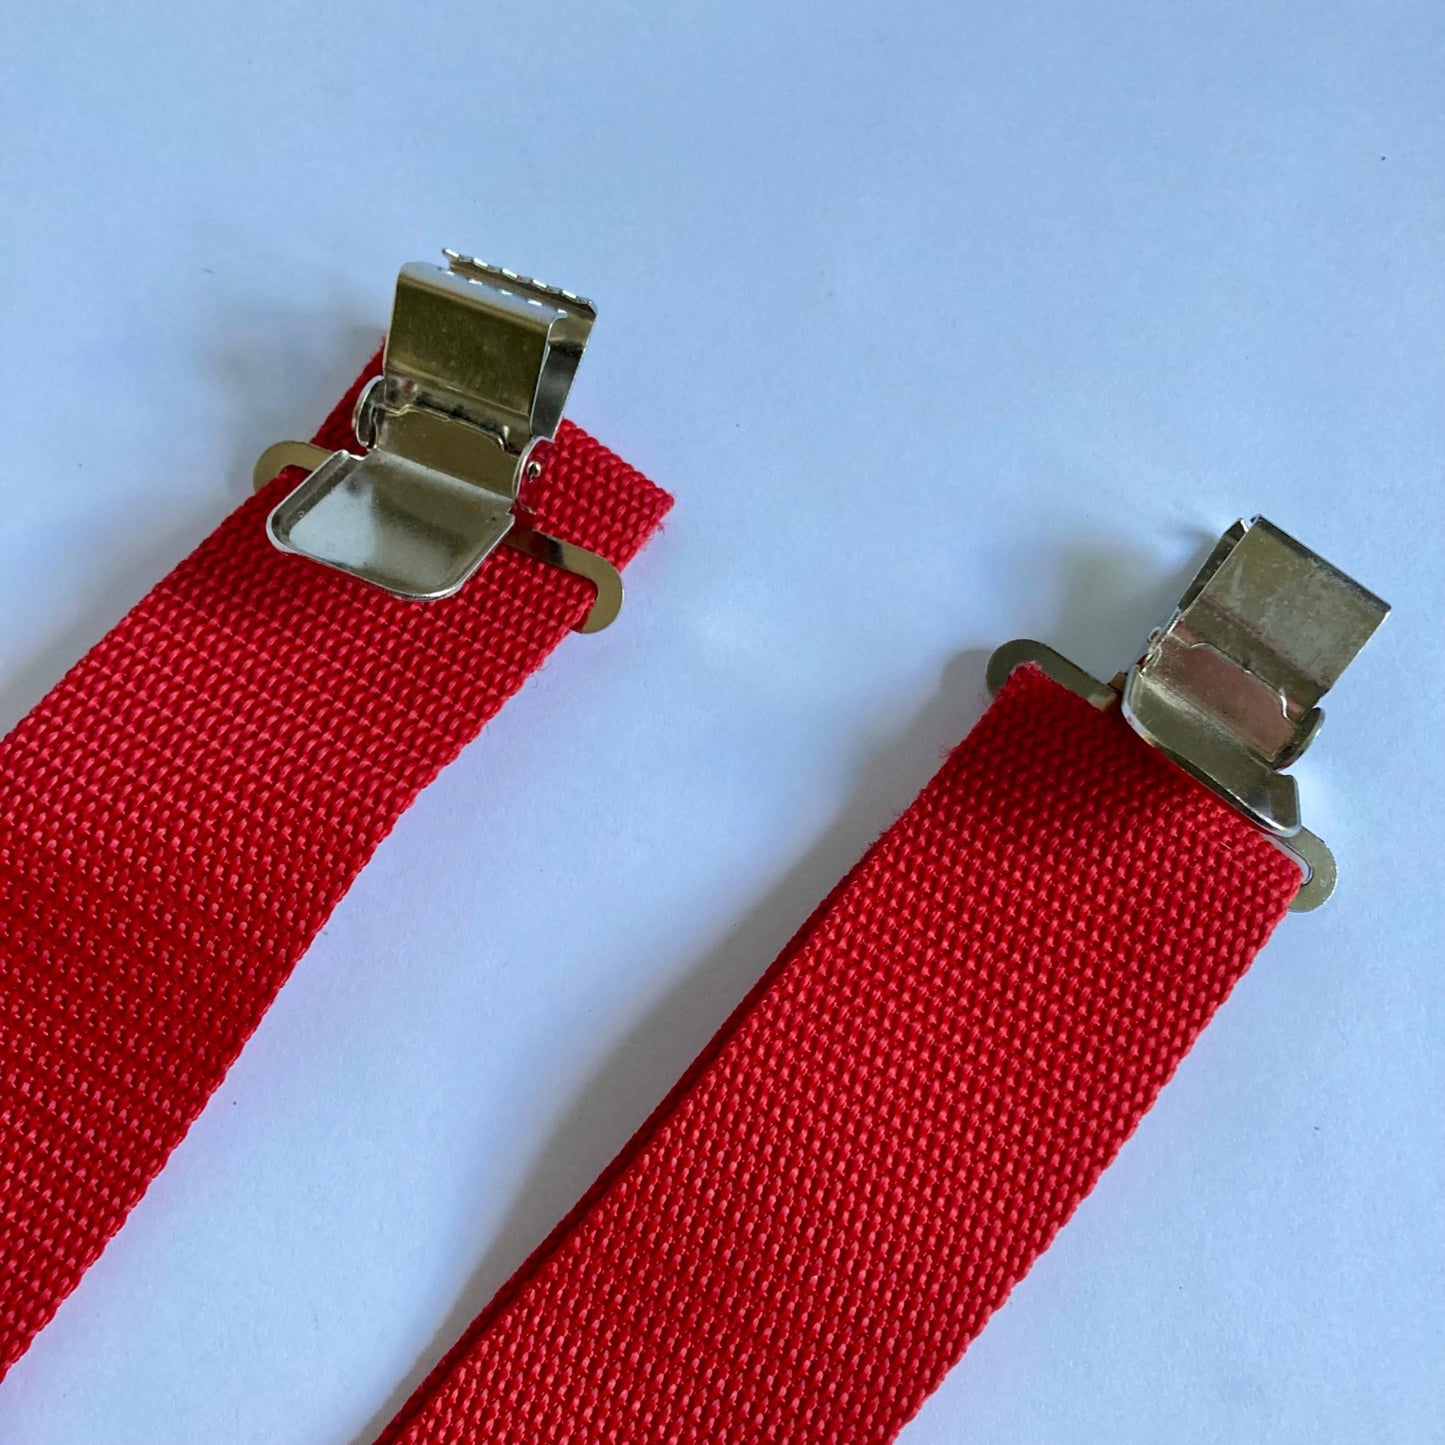 Carhartt Utility Suspenders Red Adjustable Silver Metal Clips